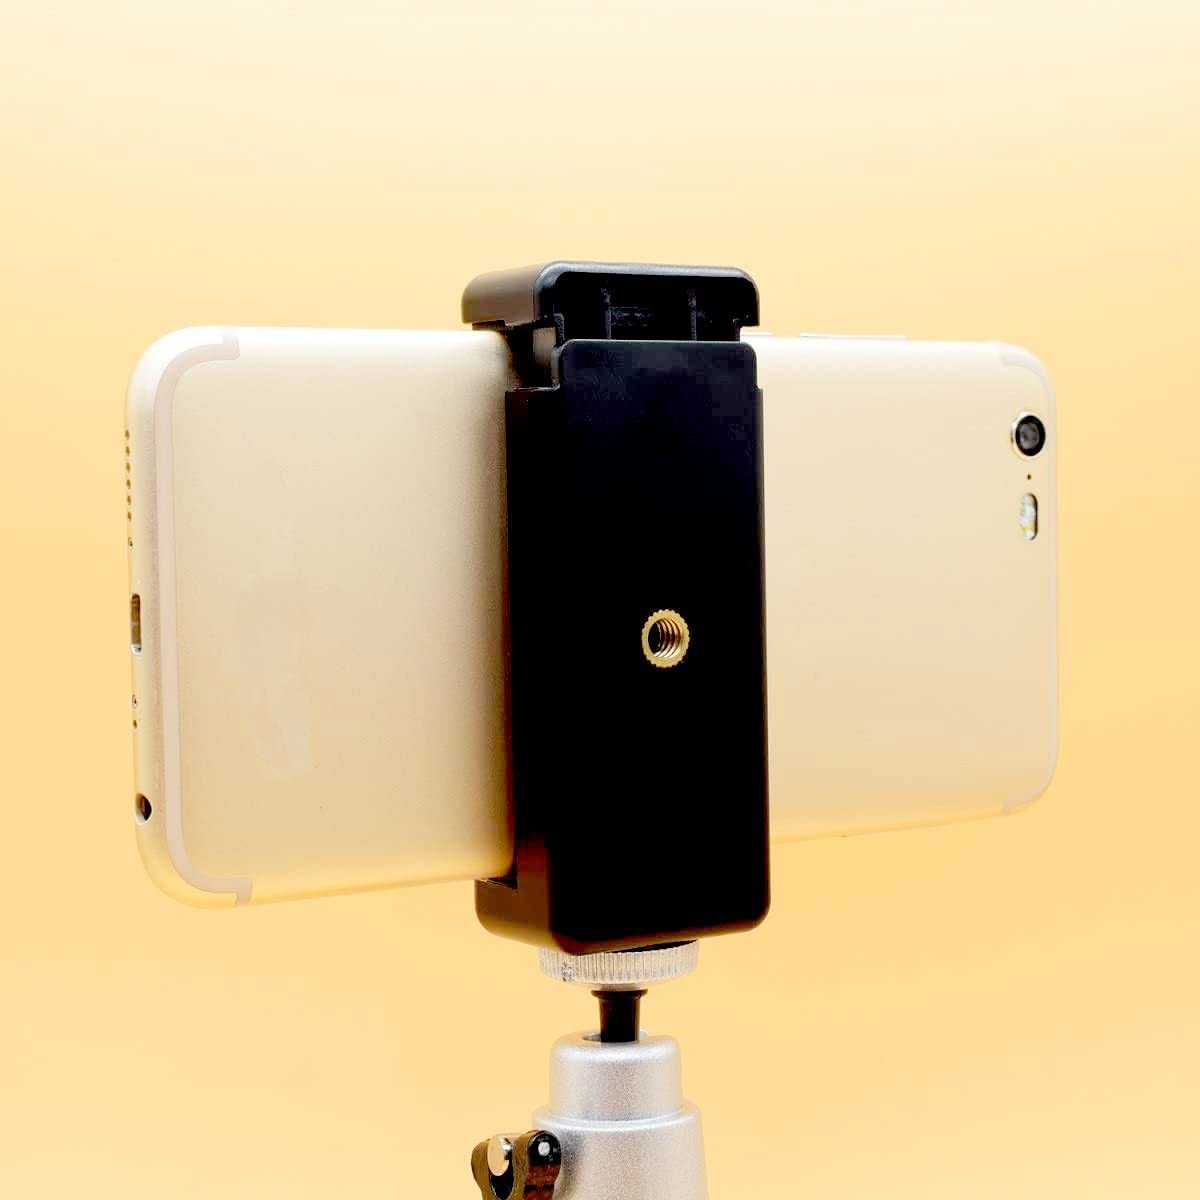 EYUVAA Monopod Holder Clip for Mobile Camera & Tripod Mount Holder Adjustable Smartphone Clip Compatible with All Smartphones